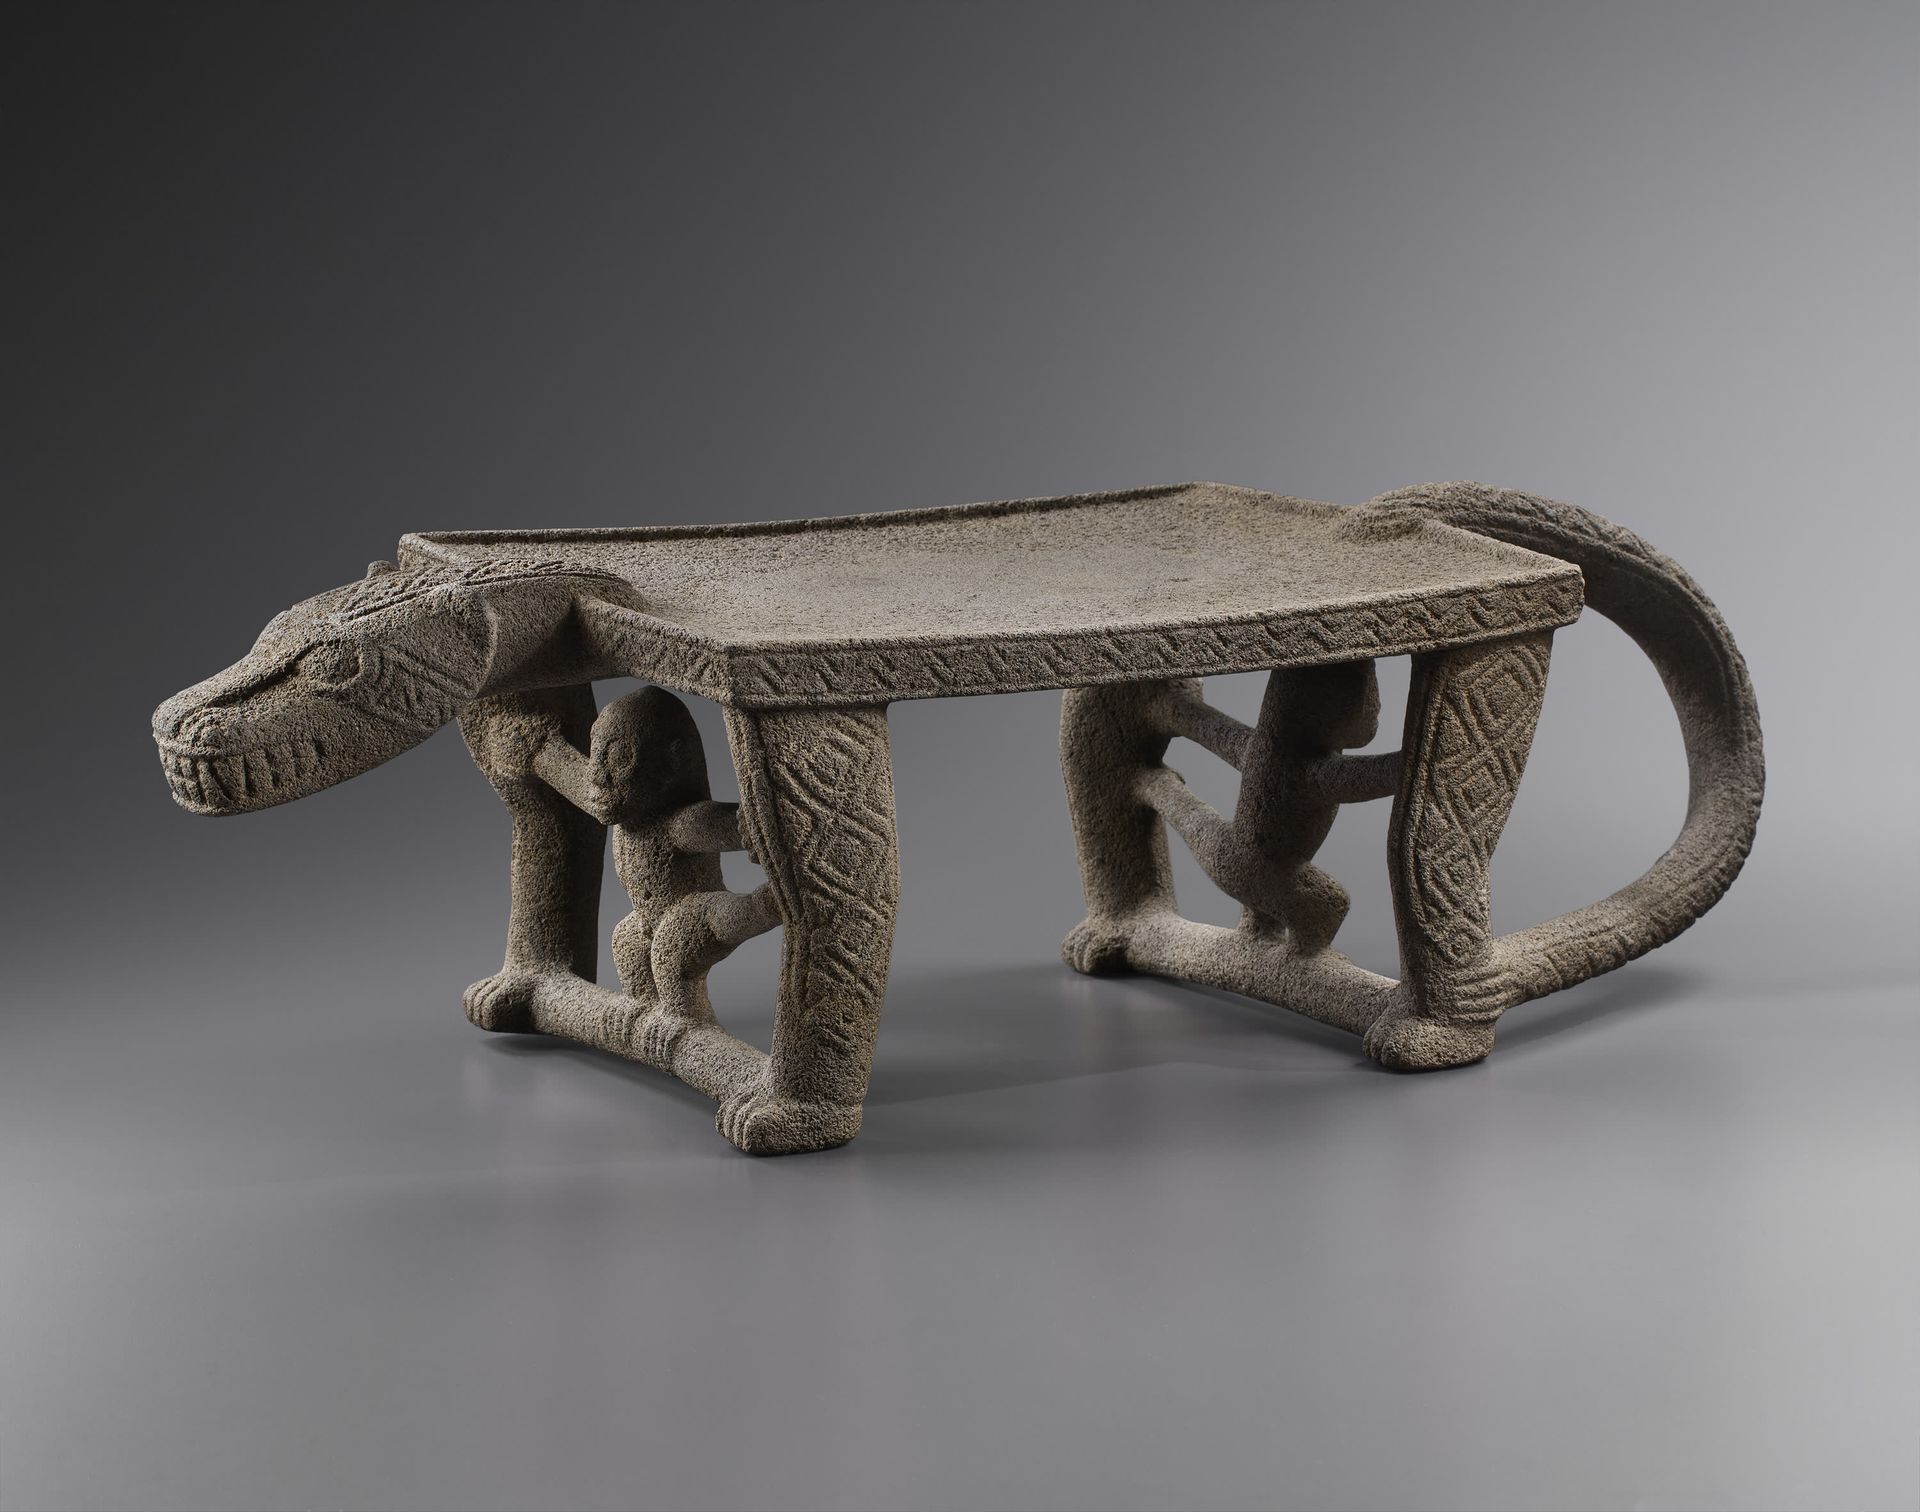 *Sculpture zoomorphe 
que representa un metate ceremonial en forma de jaguar. 

&hellip;